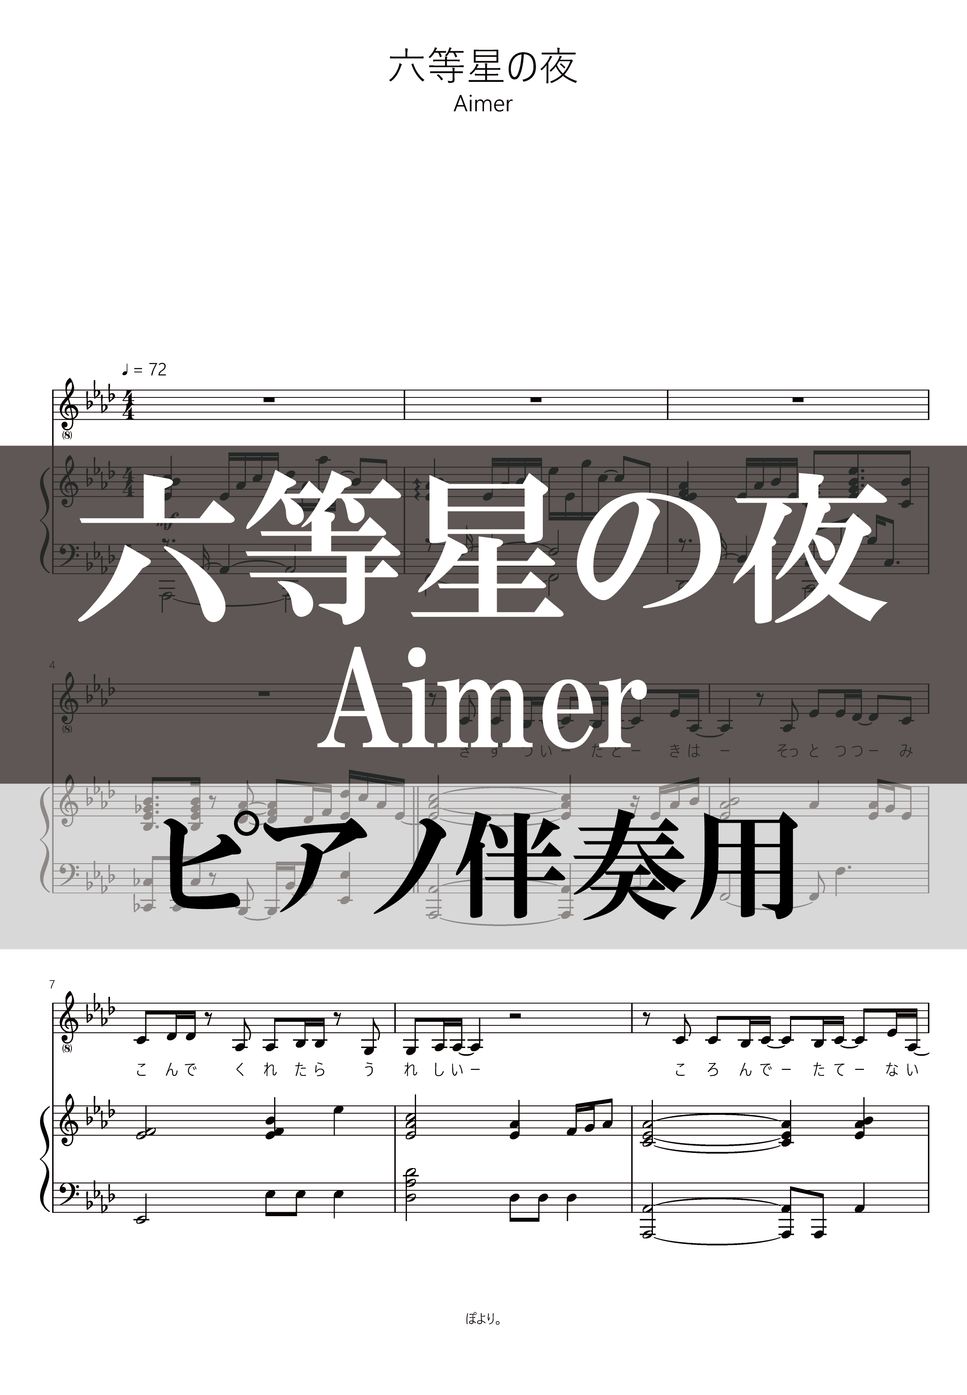 Aimer - 六等星の夜 (ピアノ伴奏/メロディ付) by poyori.